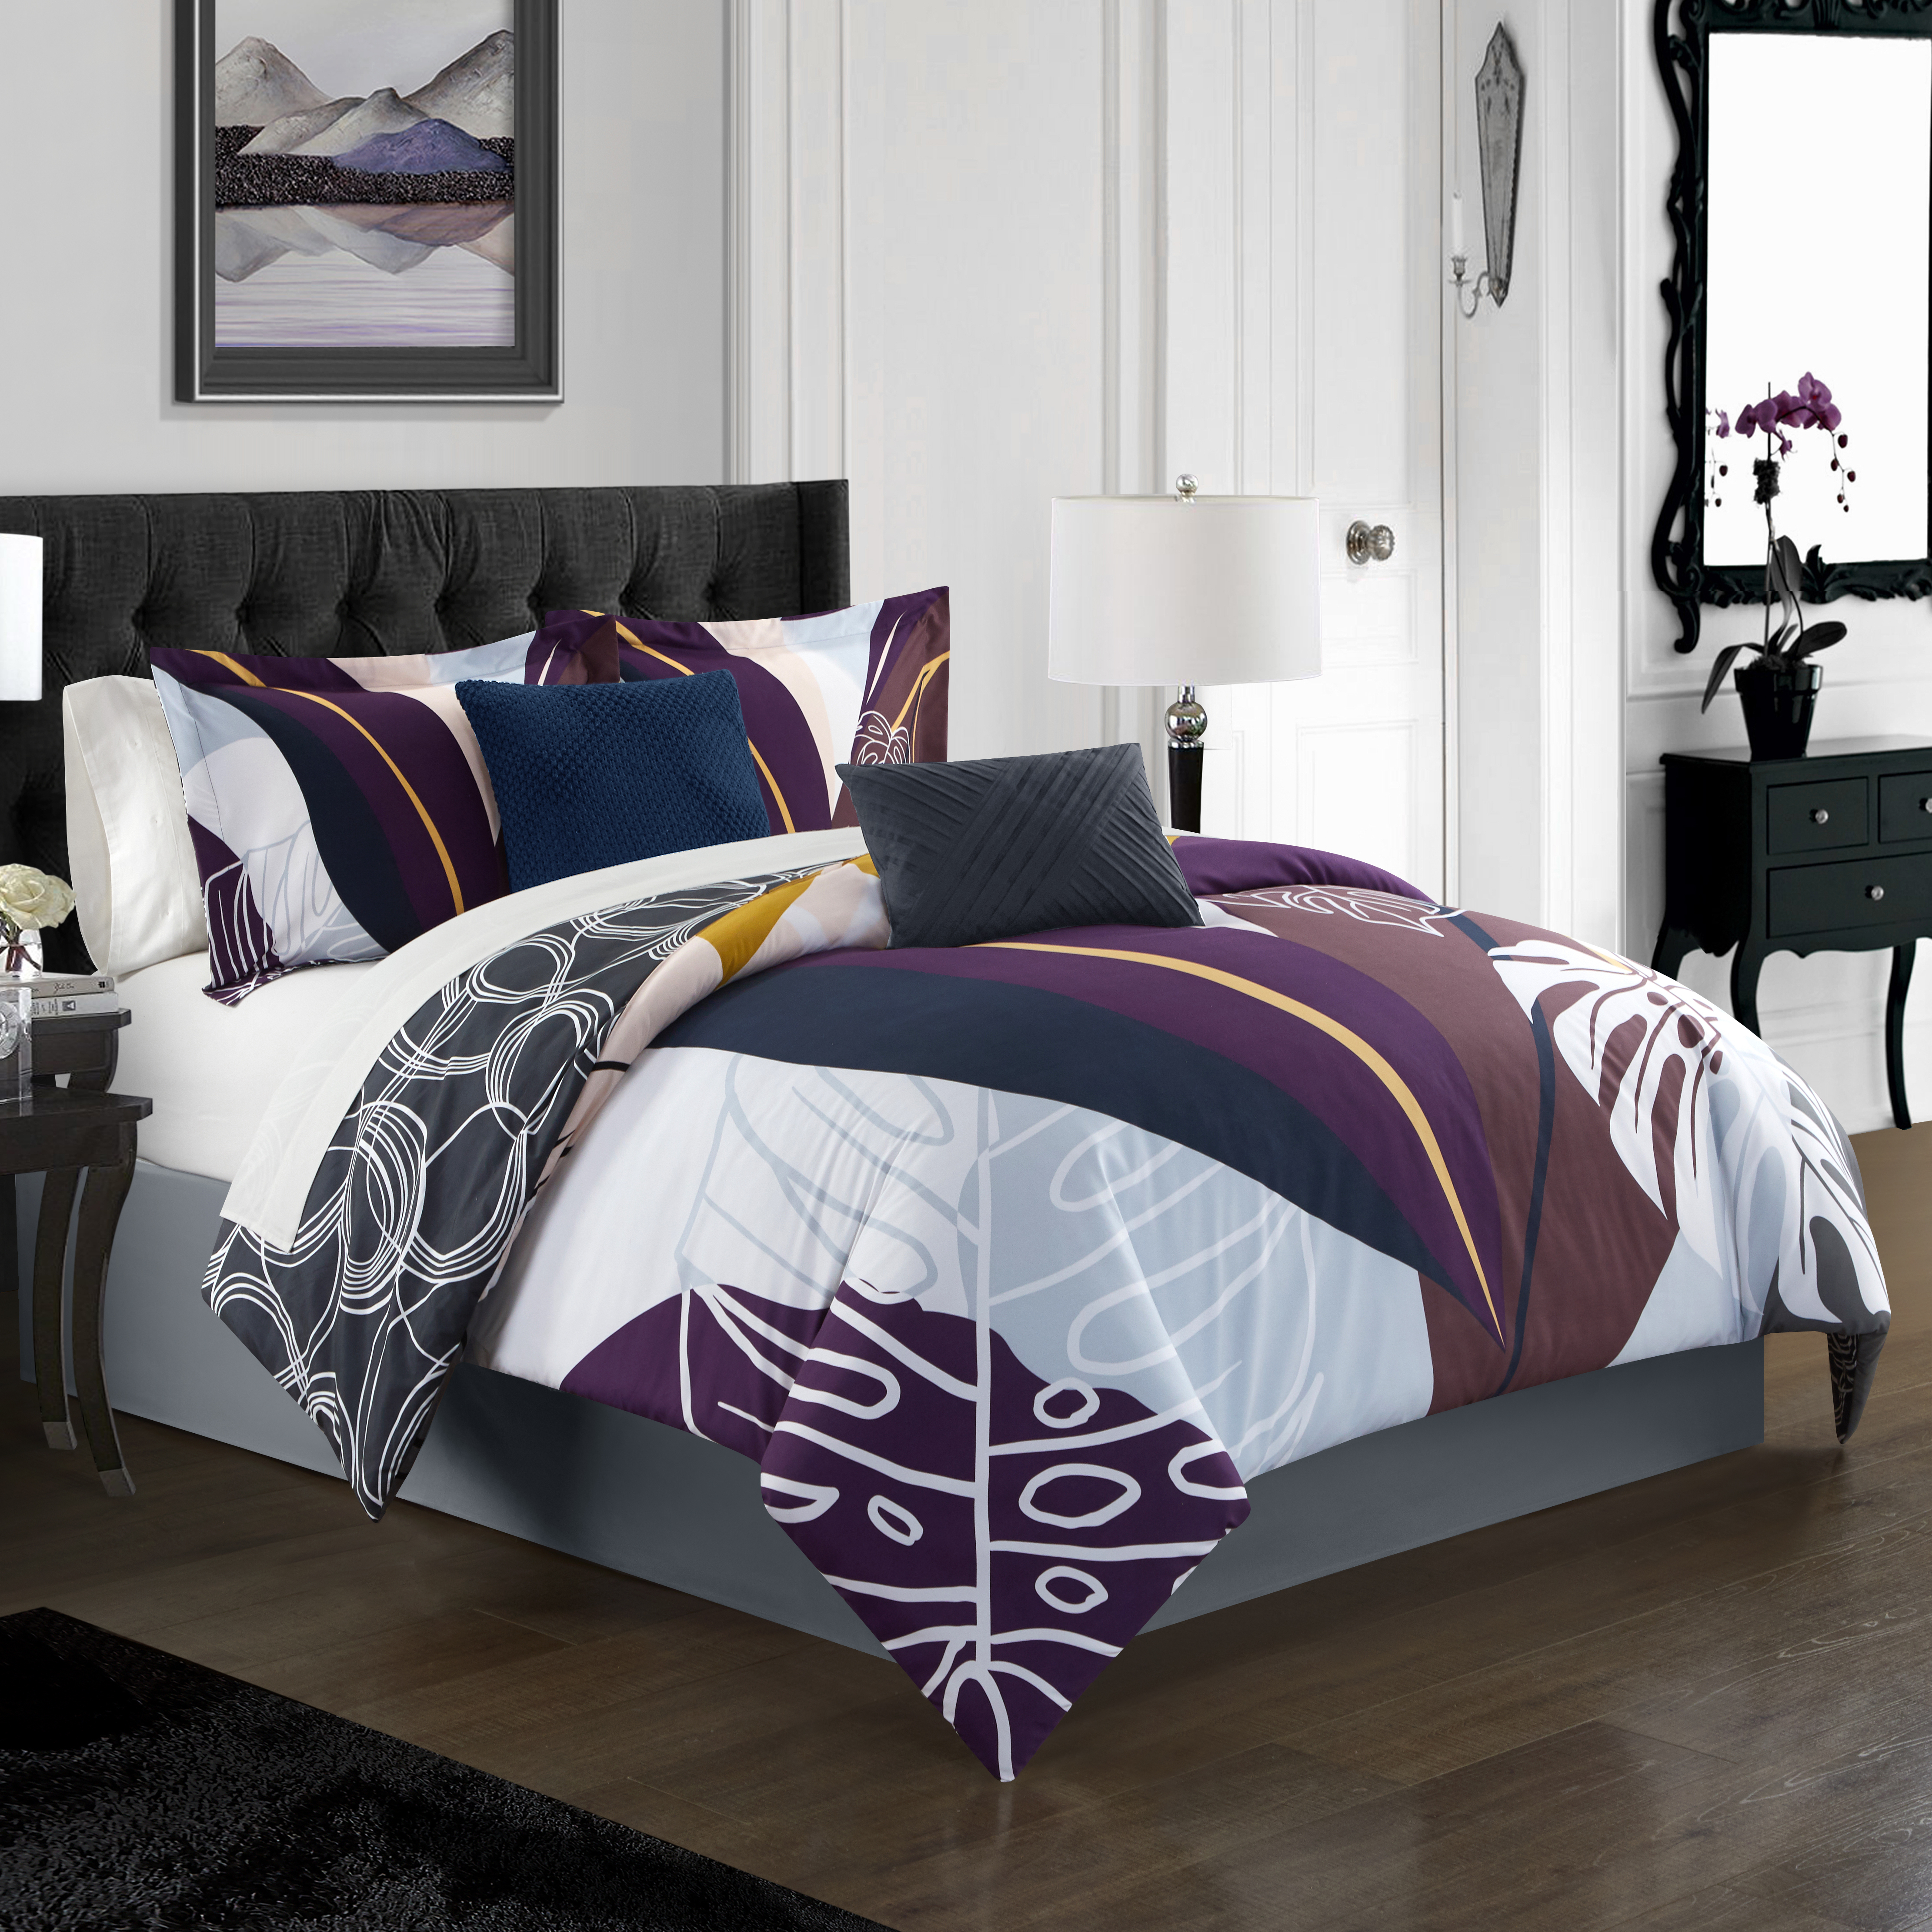 Vibrant Floral Print 5 Or 4 Piece Reversible Comforter Set - Black, Queen